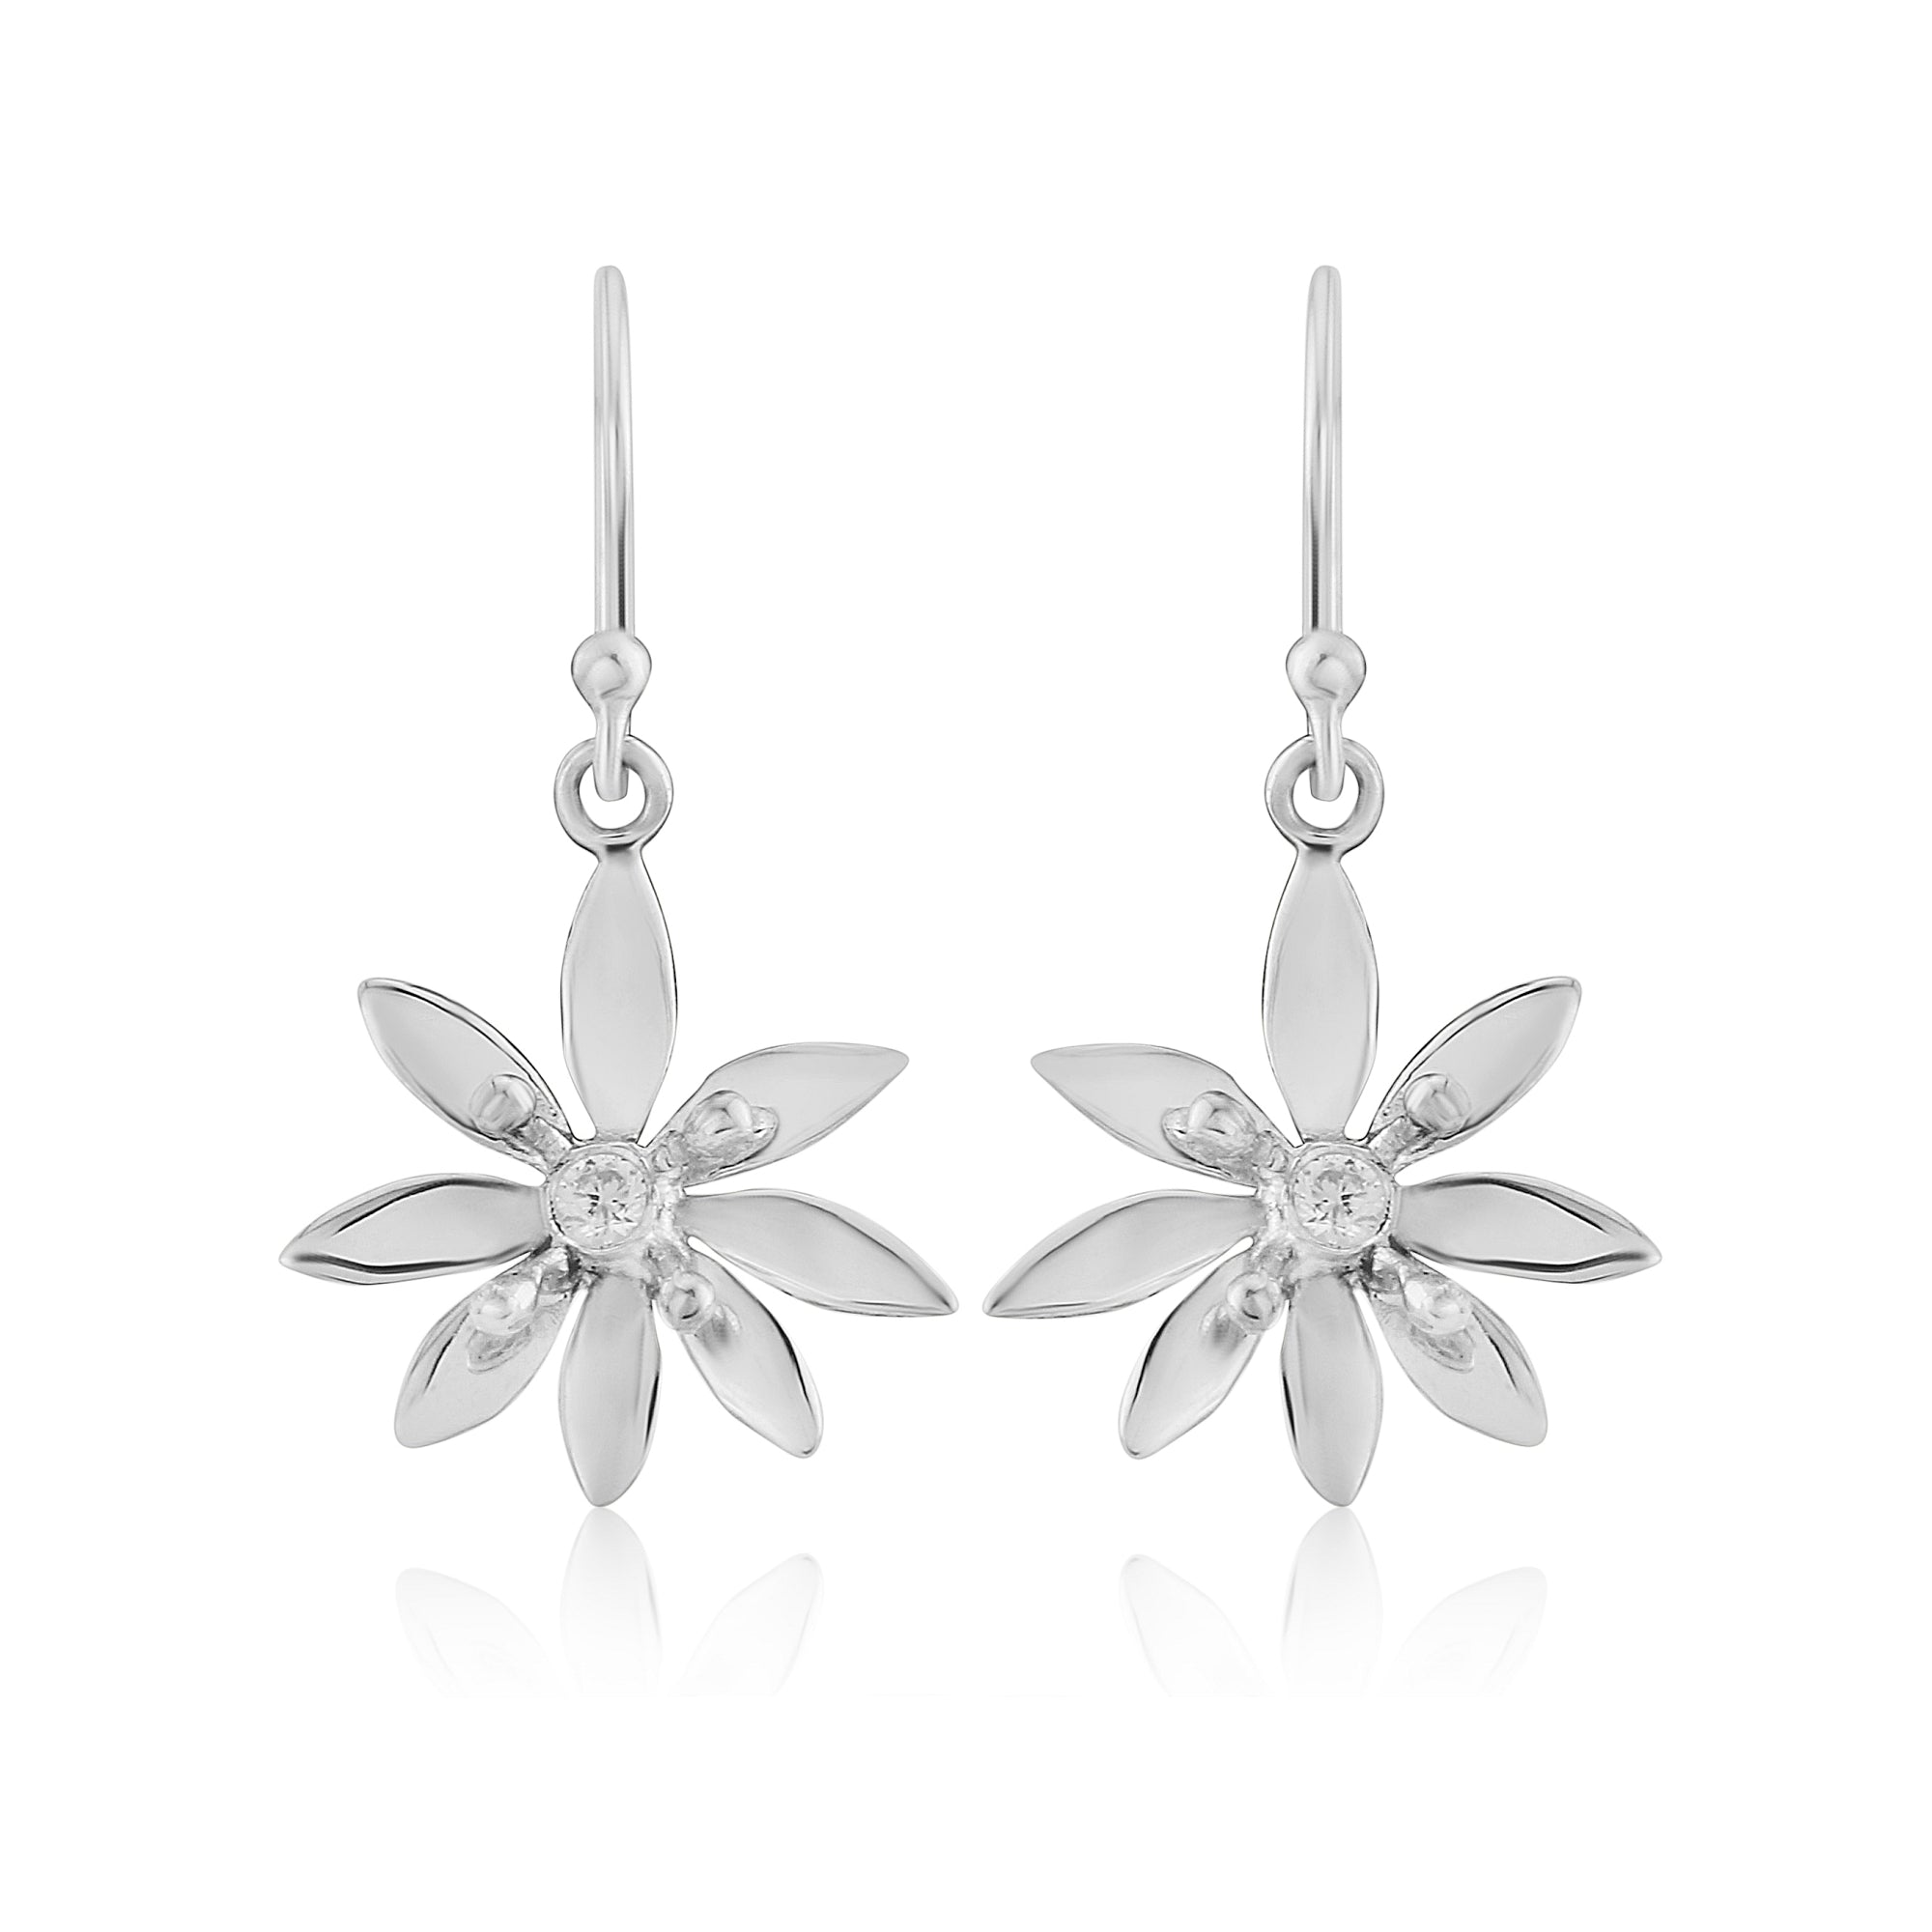  Allium medium silver drop earrings| Glenna Jewellery Scotland